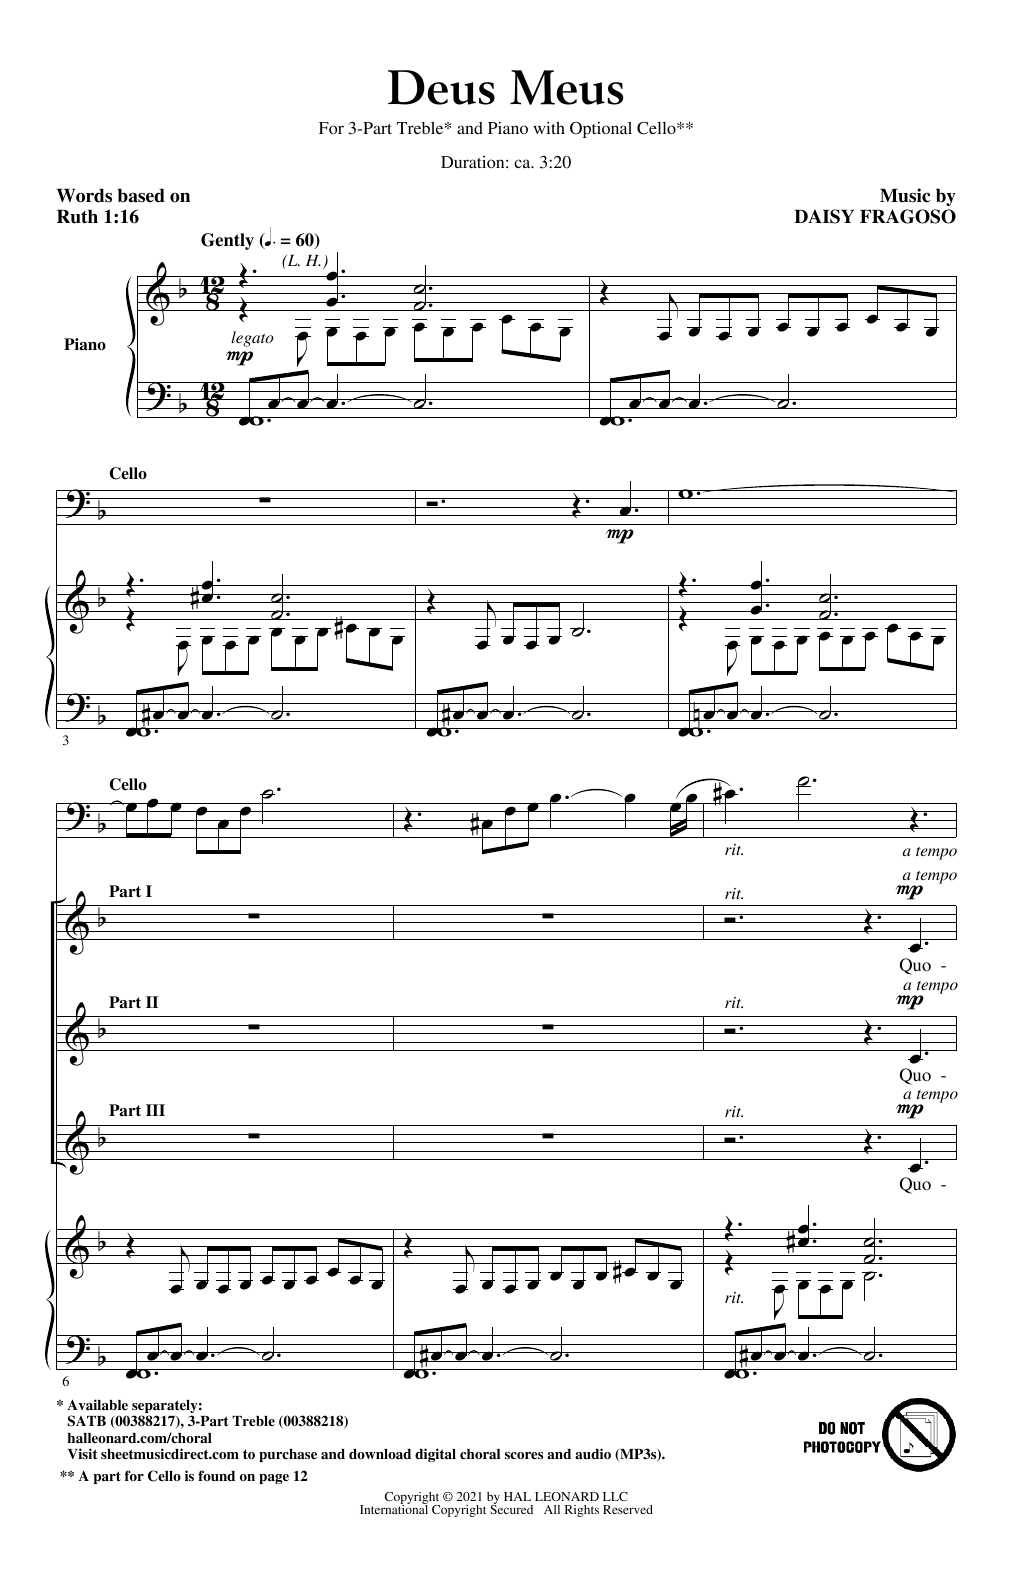 Daisy Fragoso Deus Meus Sheet Music Notes & Chords for SATB Choir - Download or Print PDF